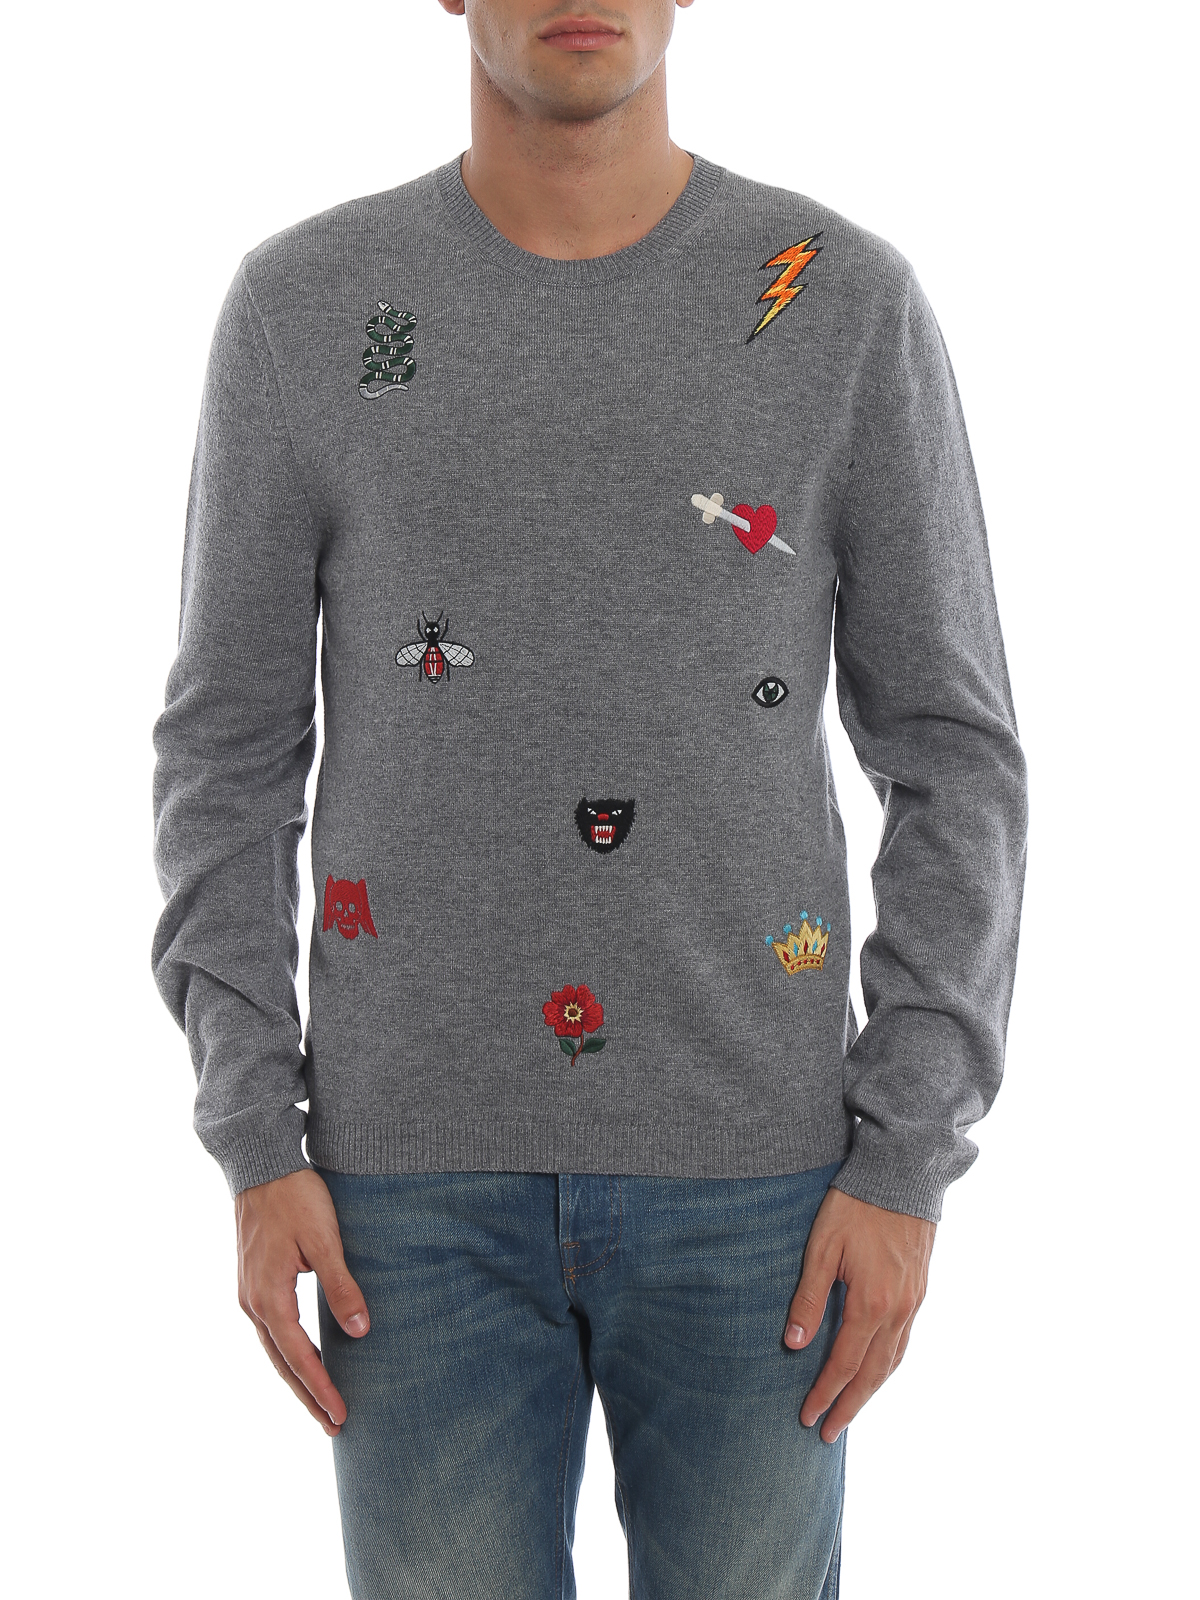 rapport Selvrespekt Ekspression Crew necks Gucci - Grey knit wool embroidered sweater - 527932X9V551113